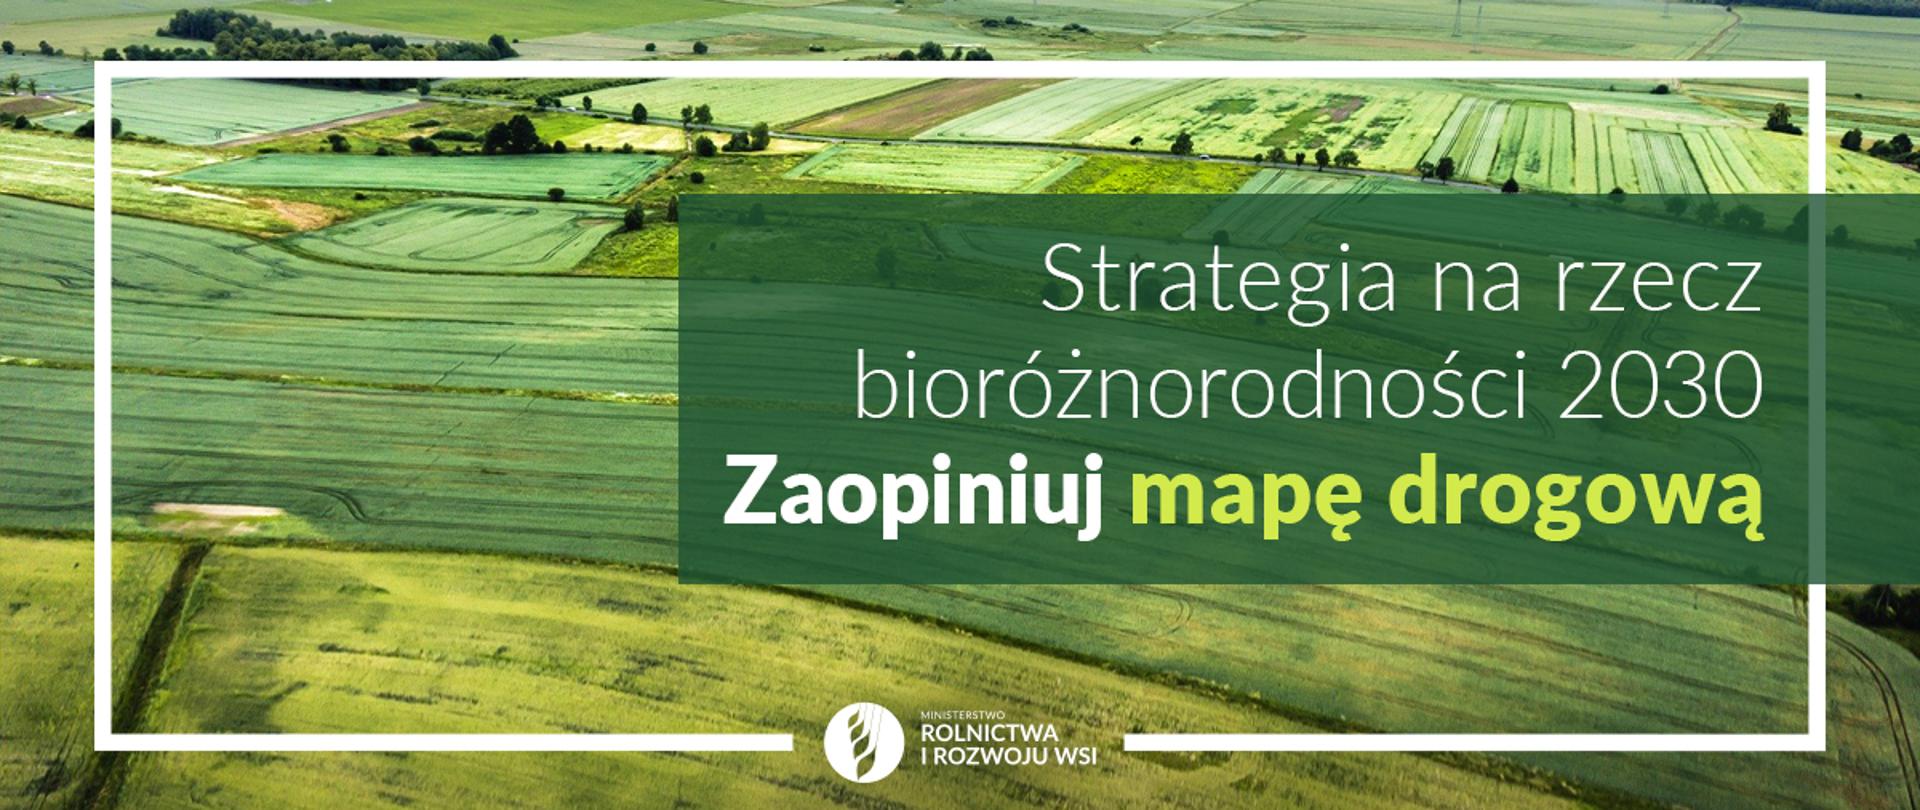 Strategia bio2030 - mapa drogowa